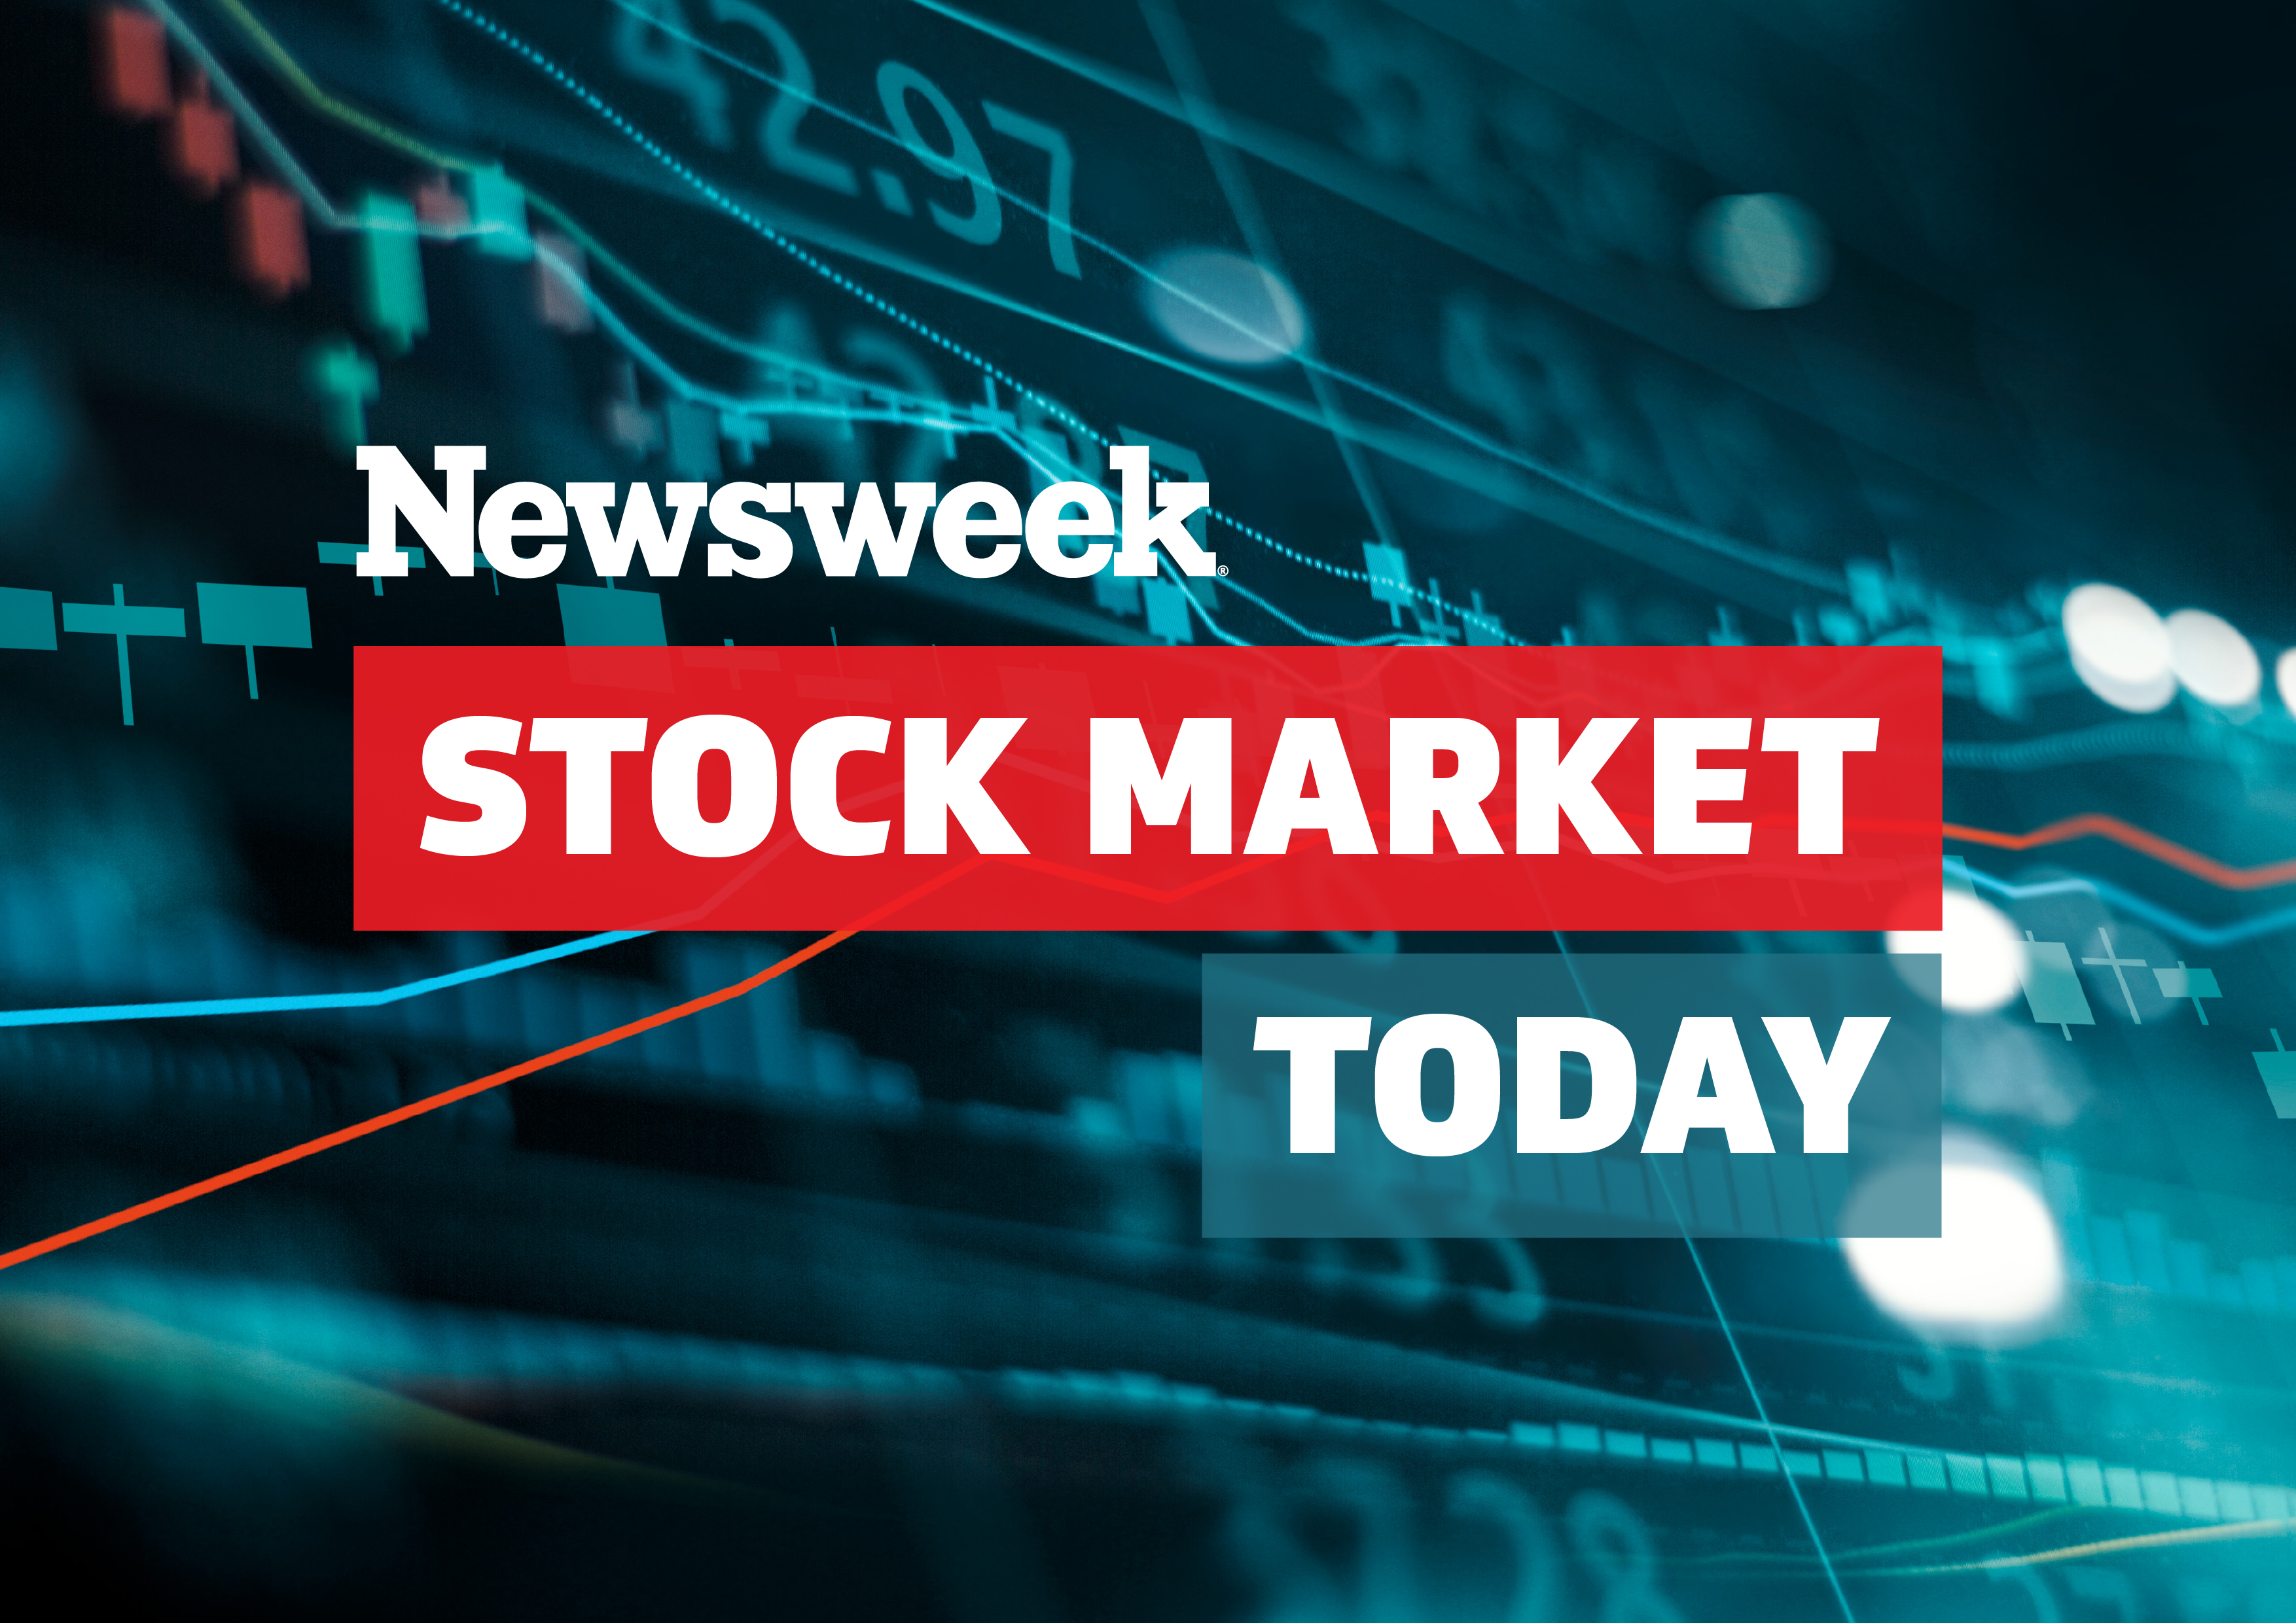 Stock market today: Shares rip higher after weak jobs report